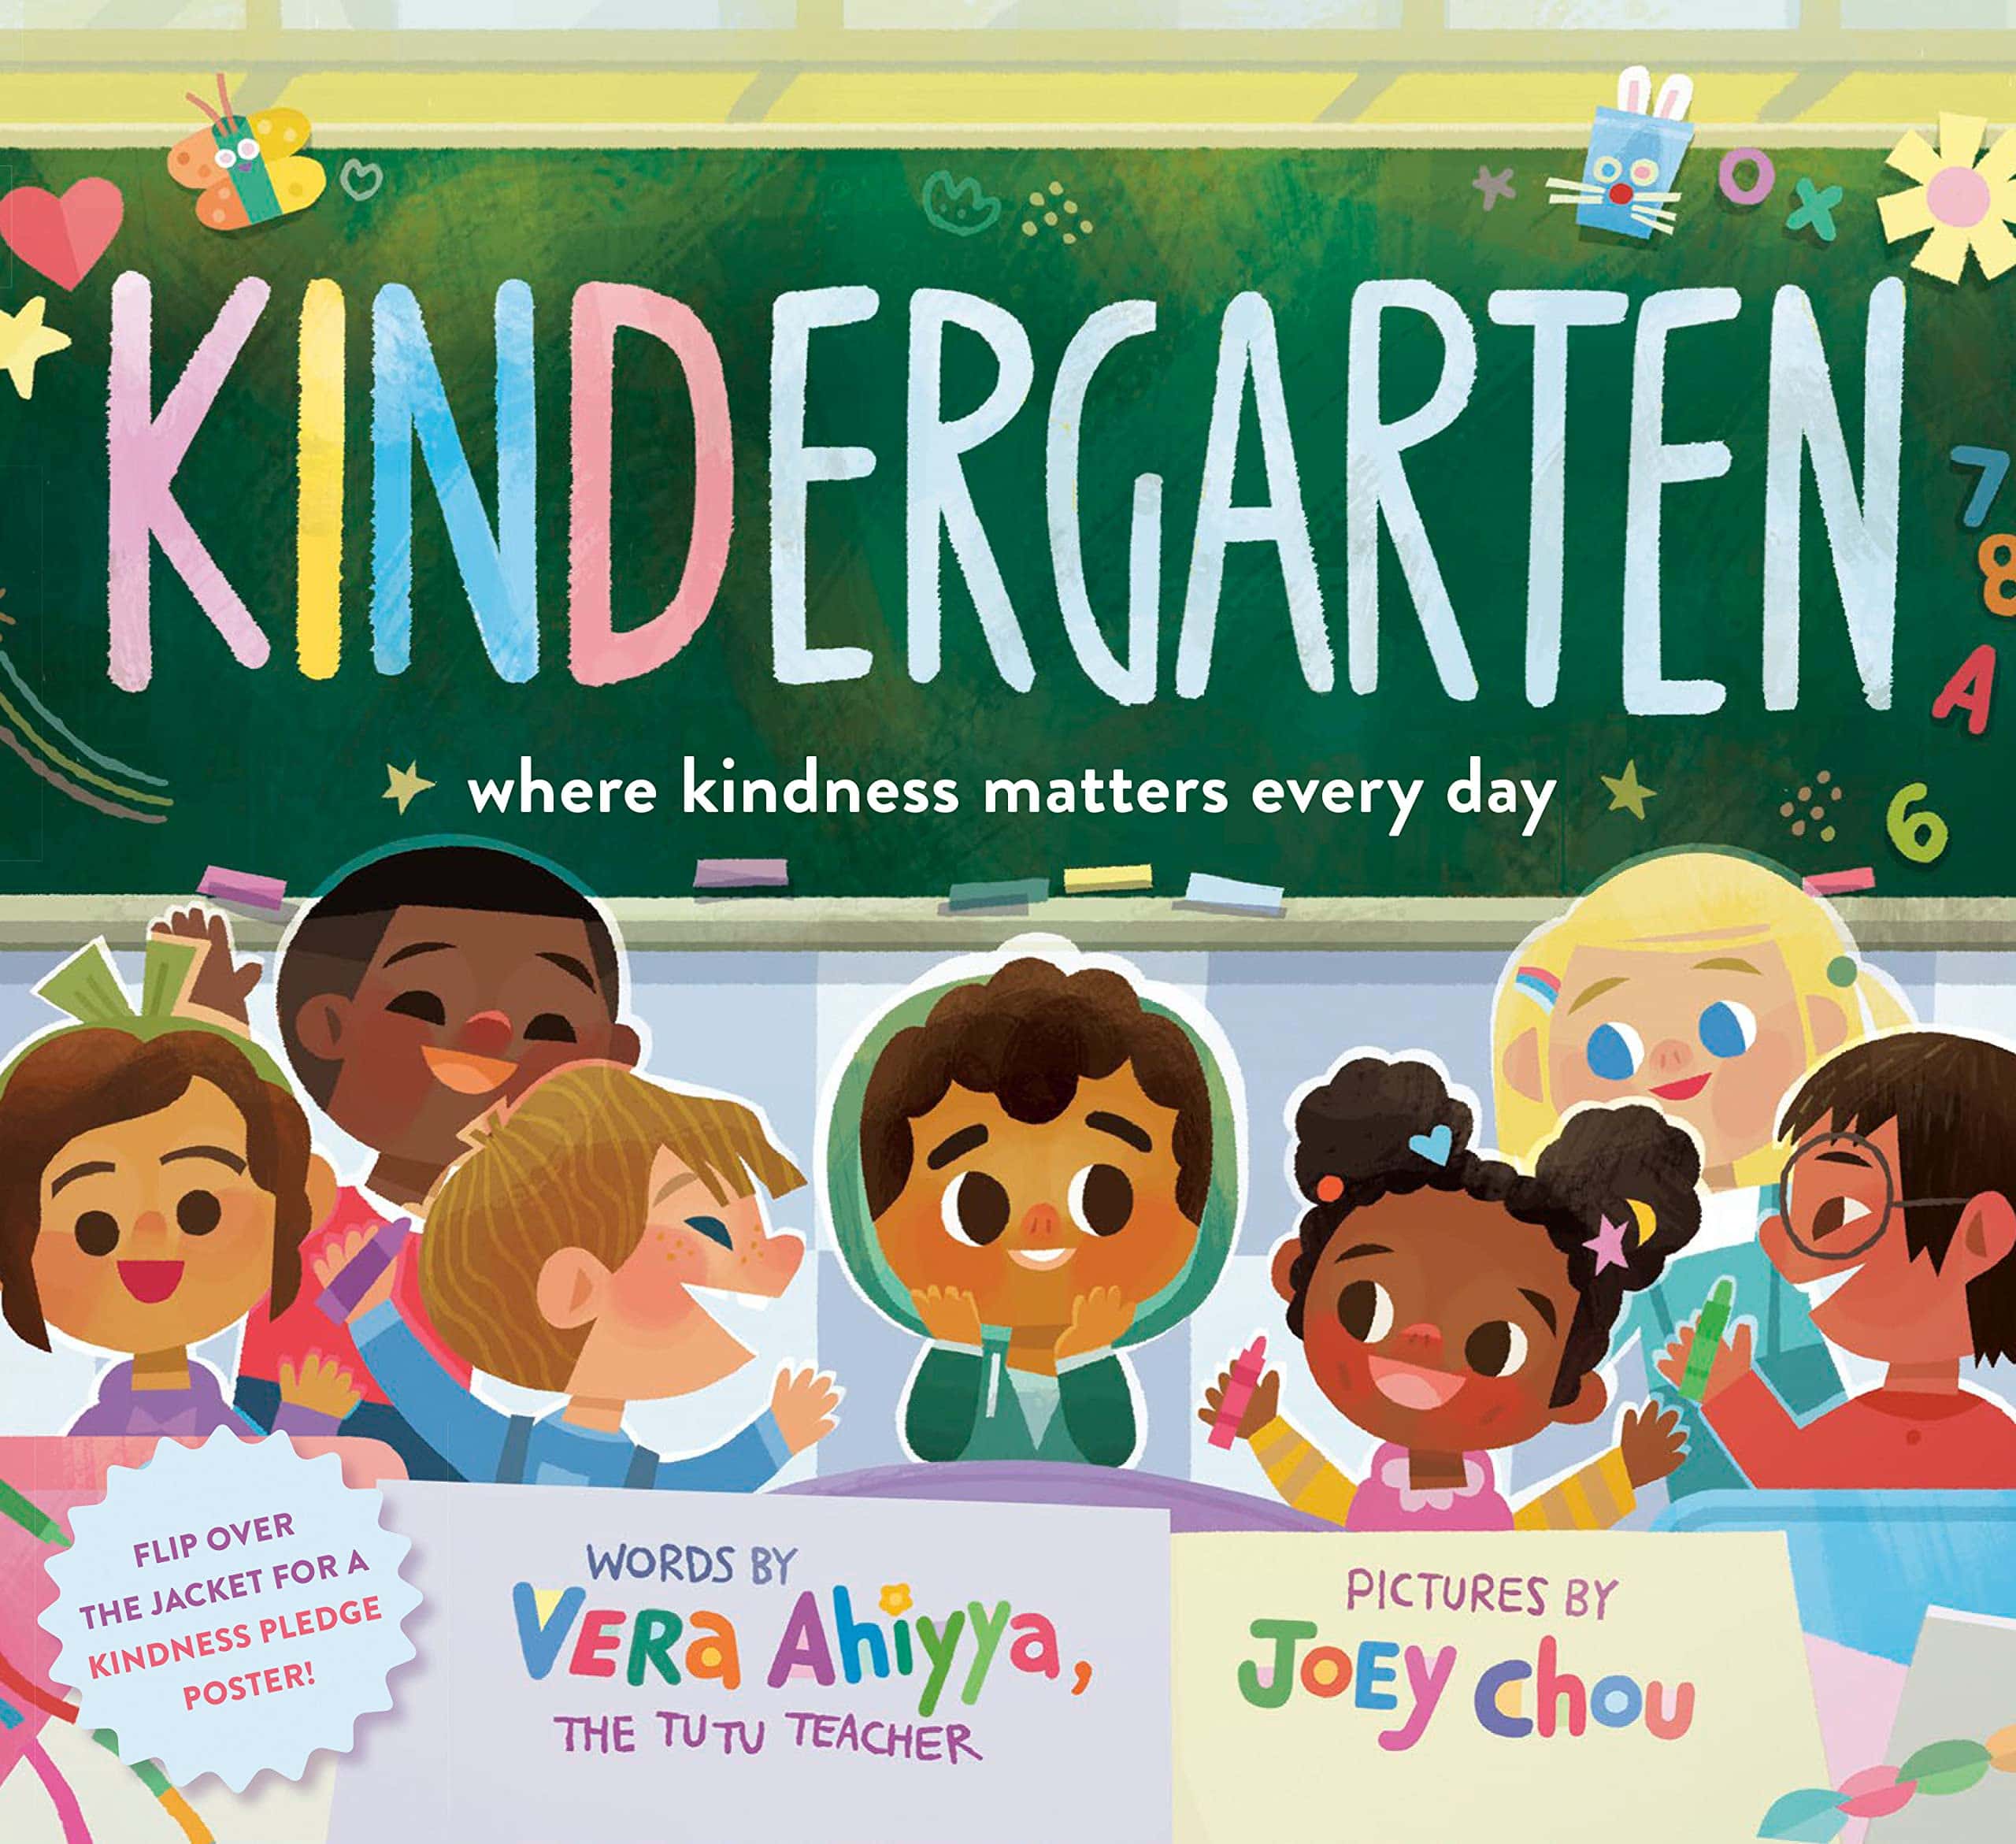 "KINDergarten: Where Kindness Matters Every Day" by Vera Ahiyya